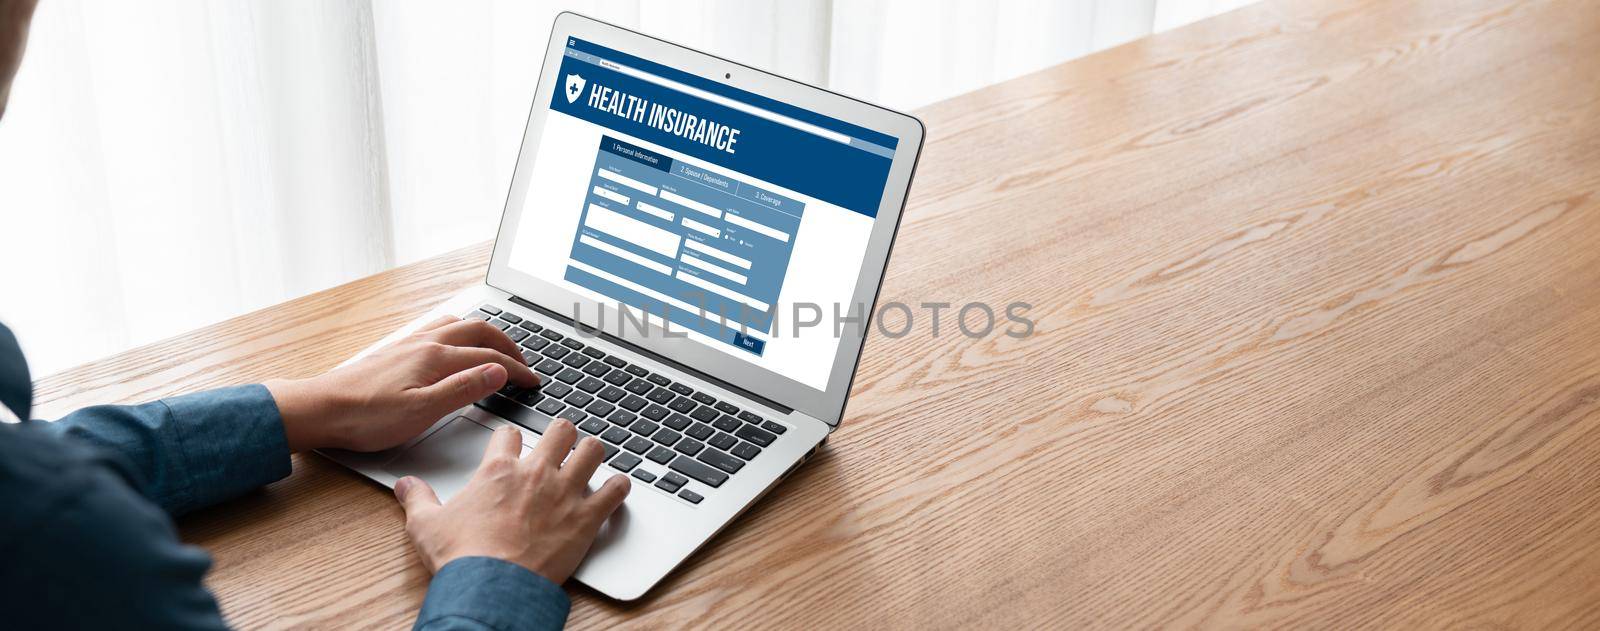 Health insurance web site modish registration system by biancoblue